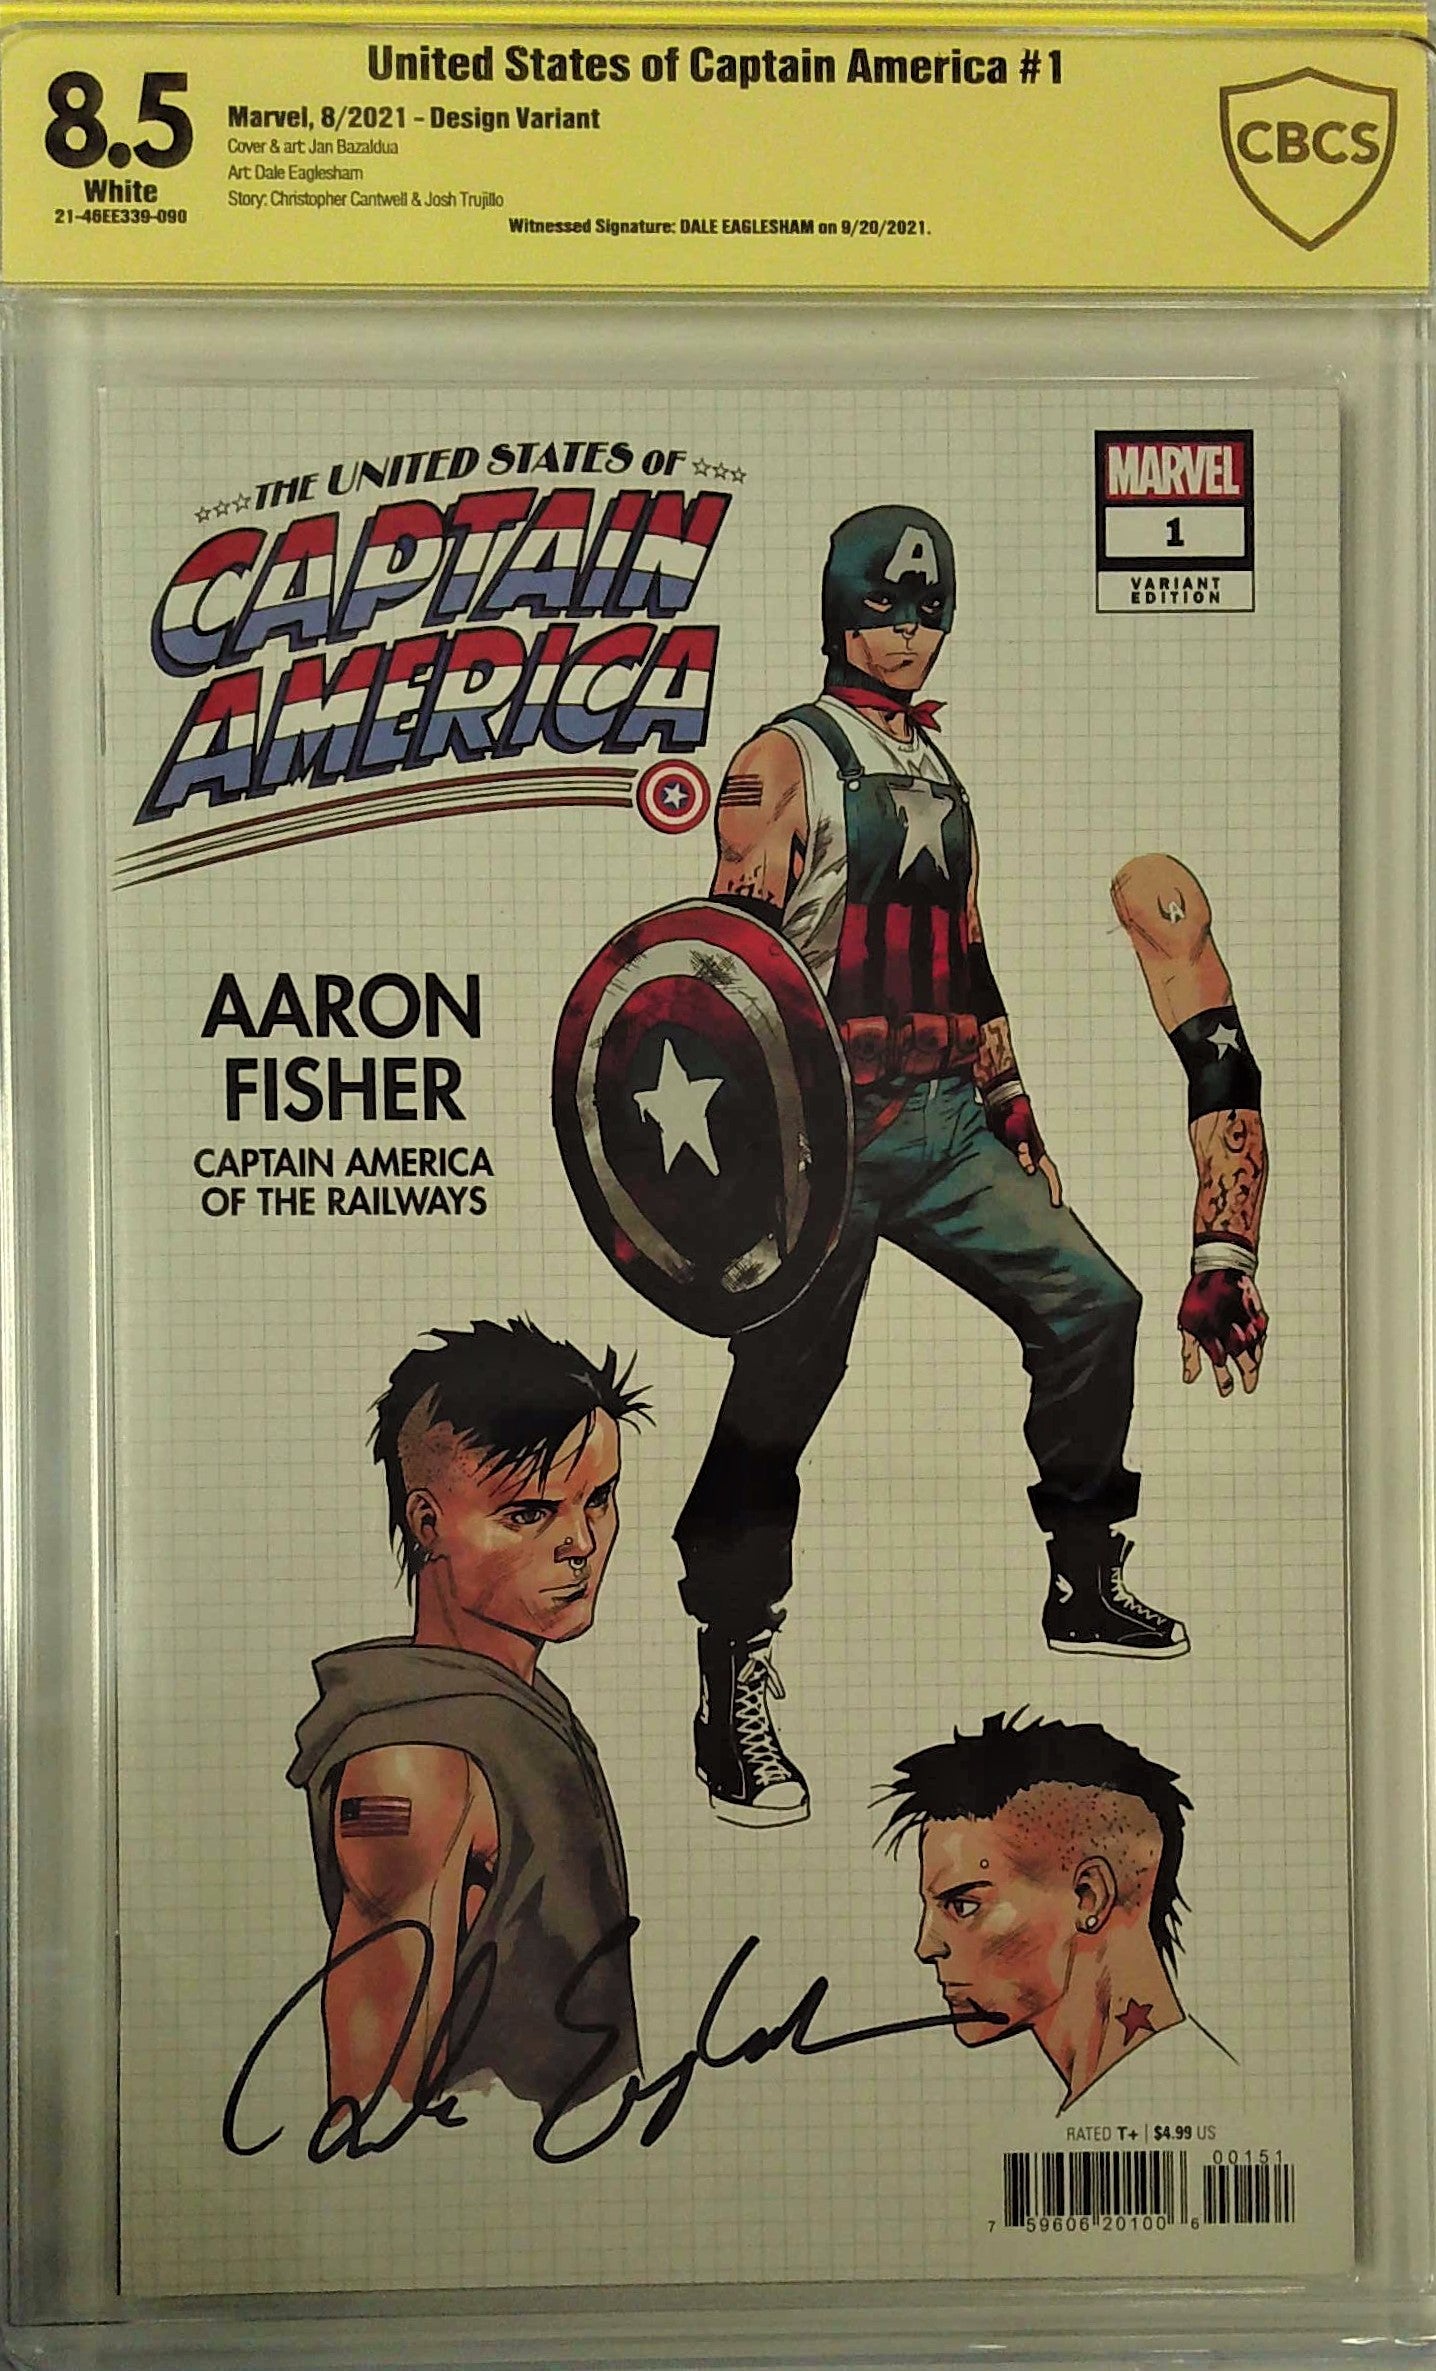 United States of Captain America #1 Design Variant CBCS 8.5 Yellow Label Dale Eaglesham